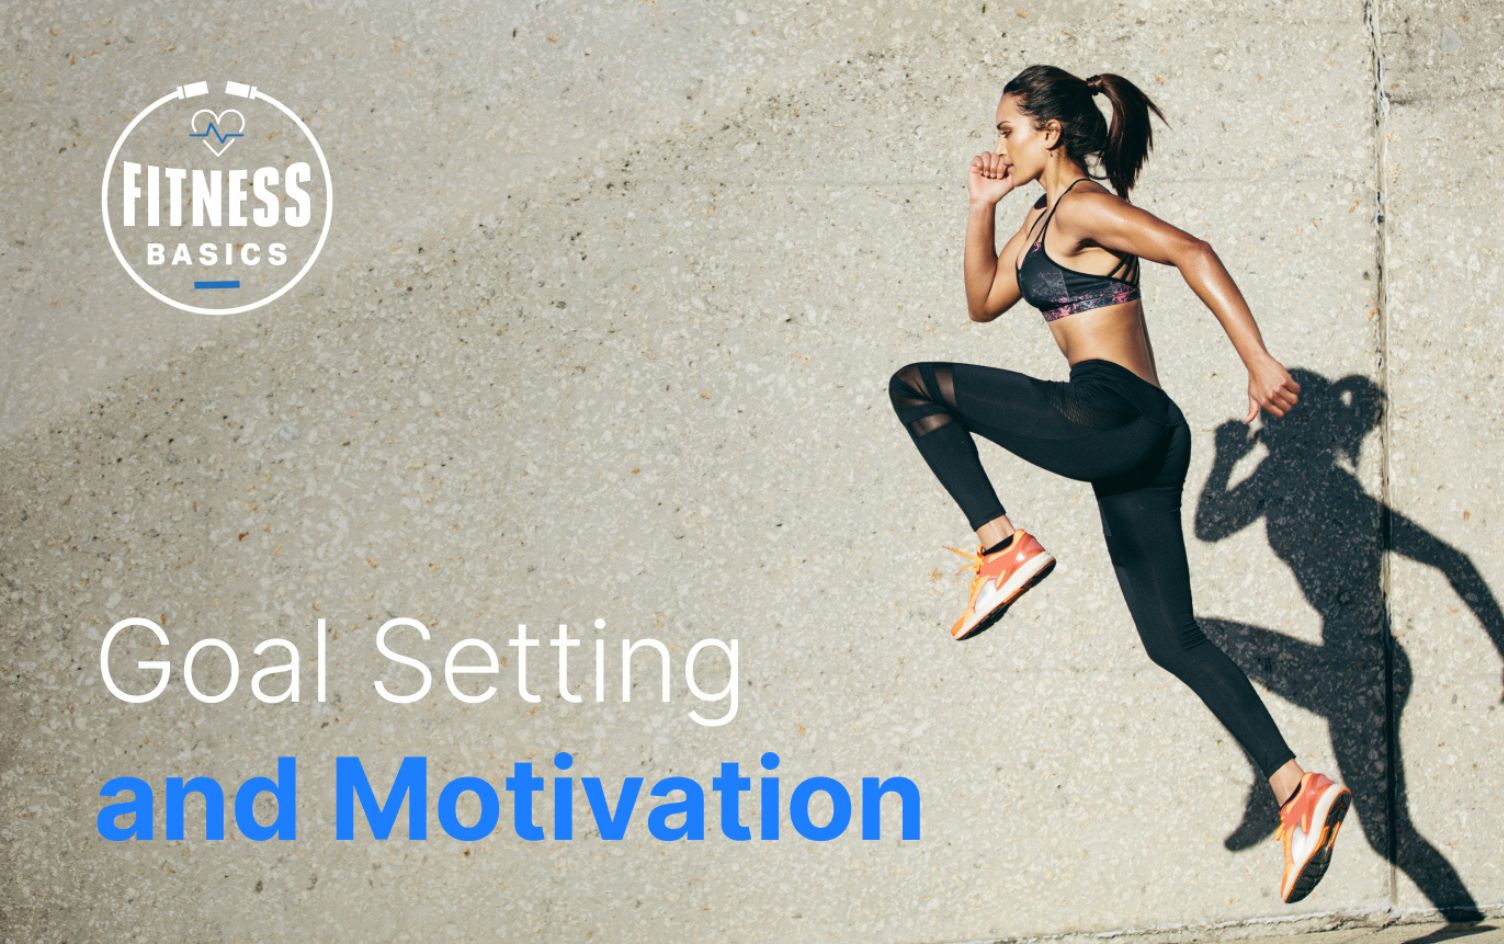 Fitness Basics: Goal Setting and Motivation, Fitness